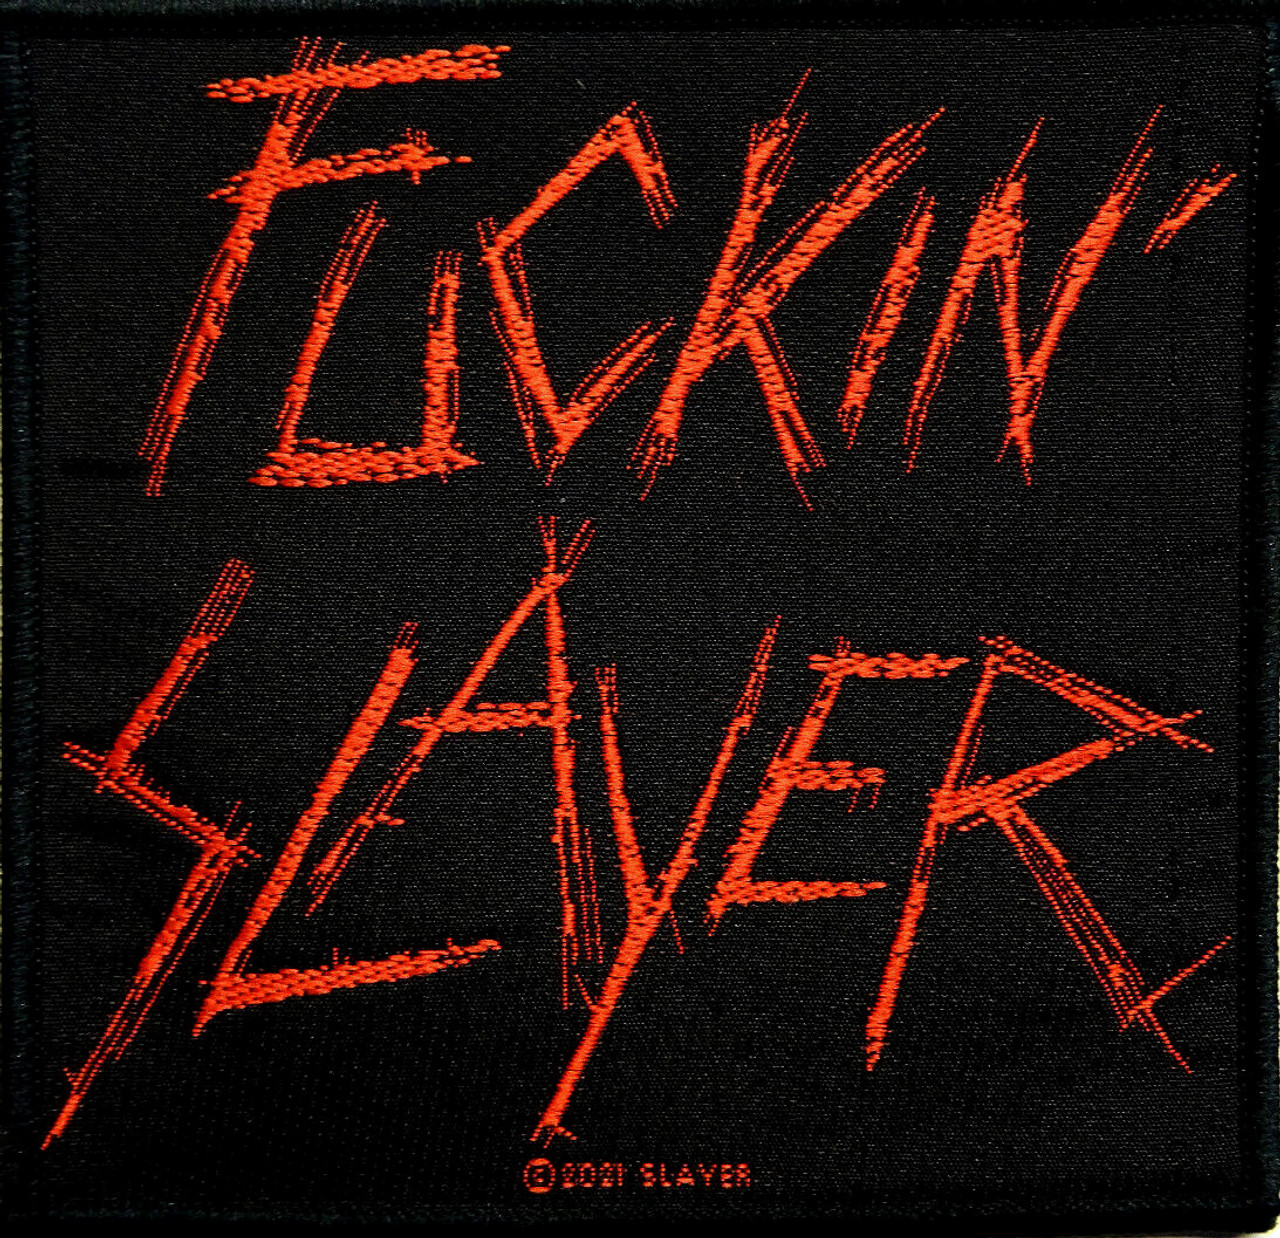 Slayer - Fuckin' Slayer - 4 x 4 Printed Woven Patch - The Blacklight Zone